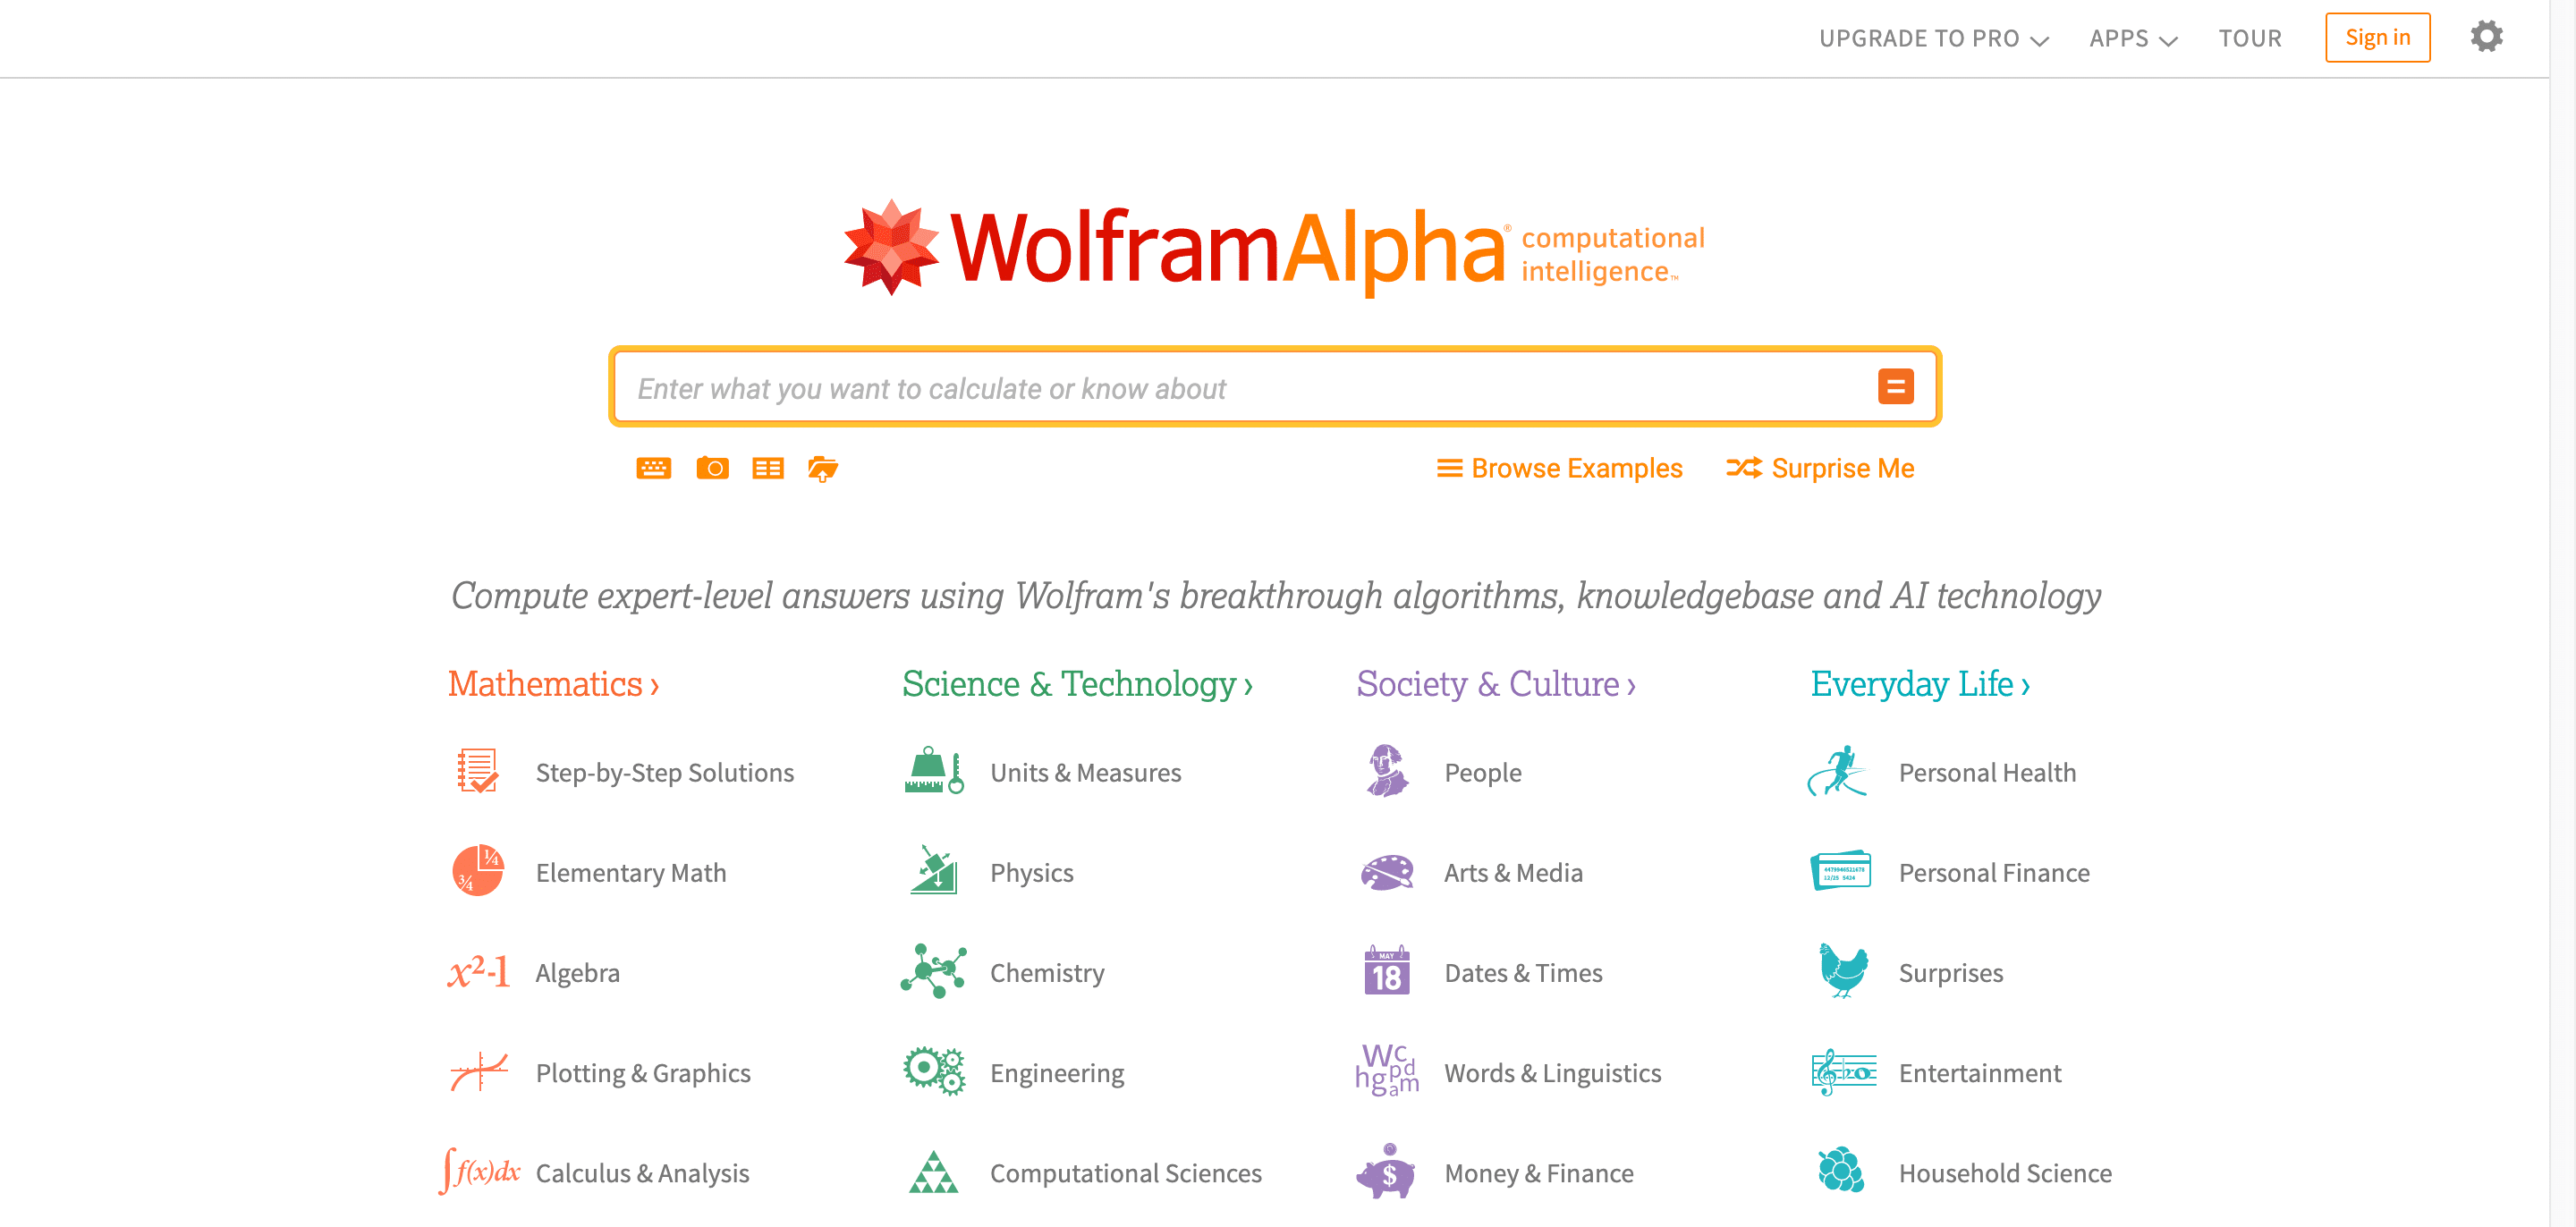 Motori di ricerca alternativi: WolframAlpha